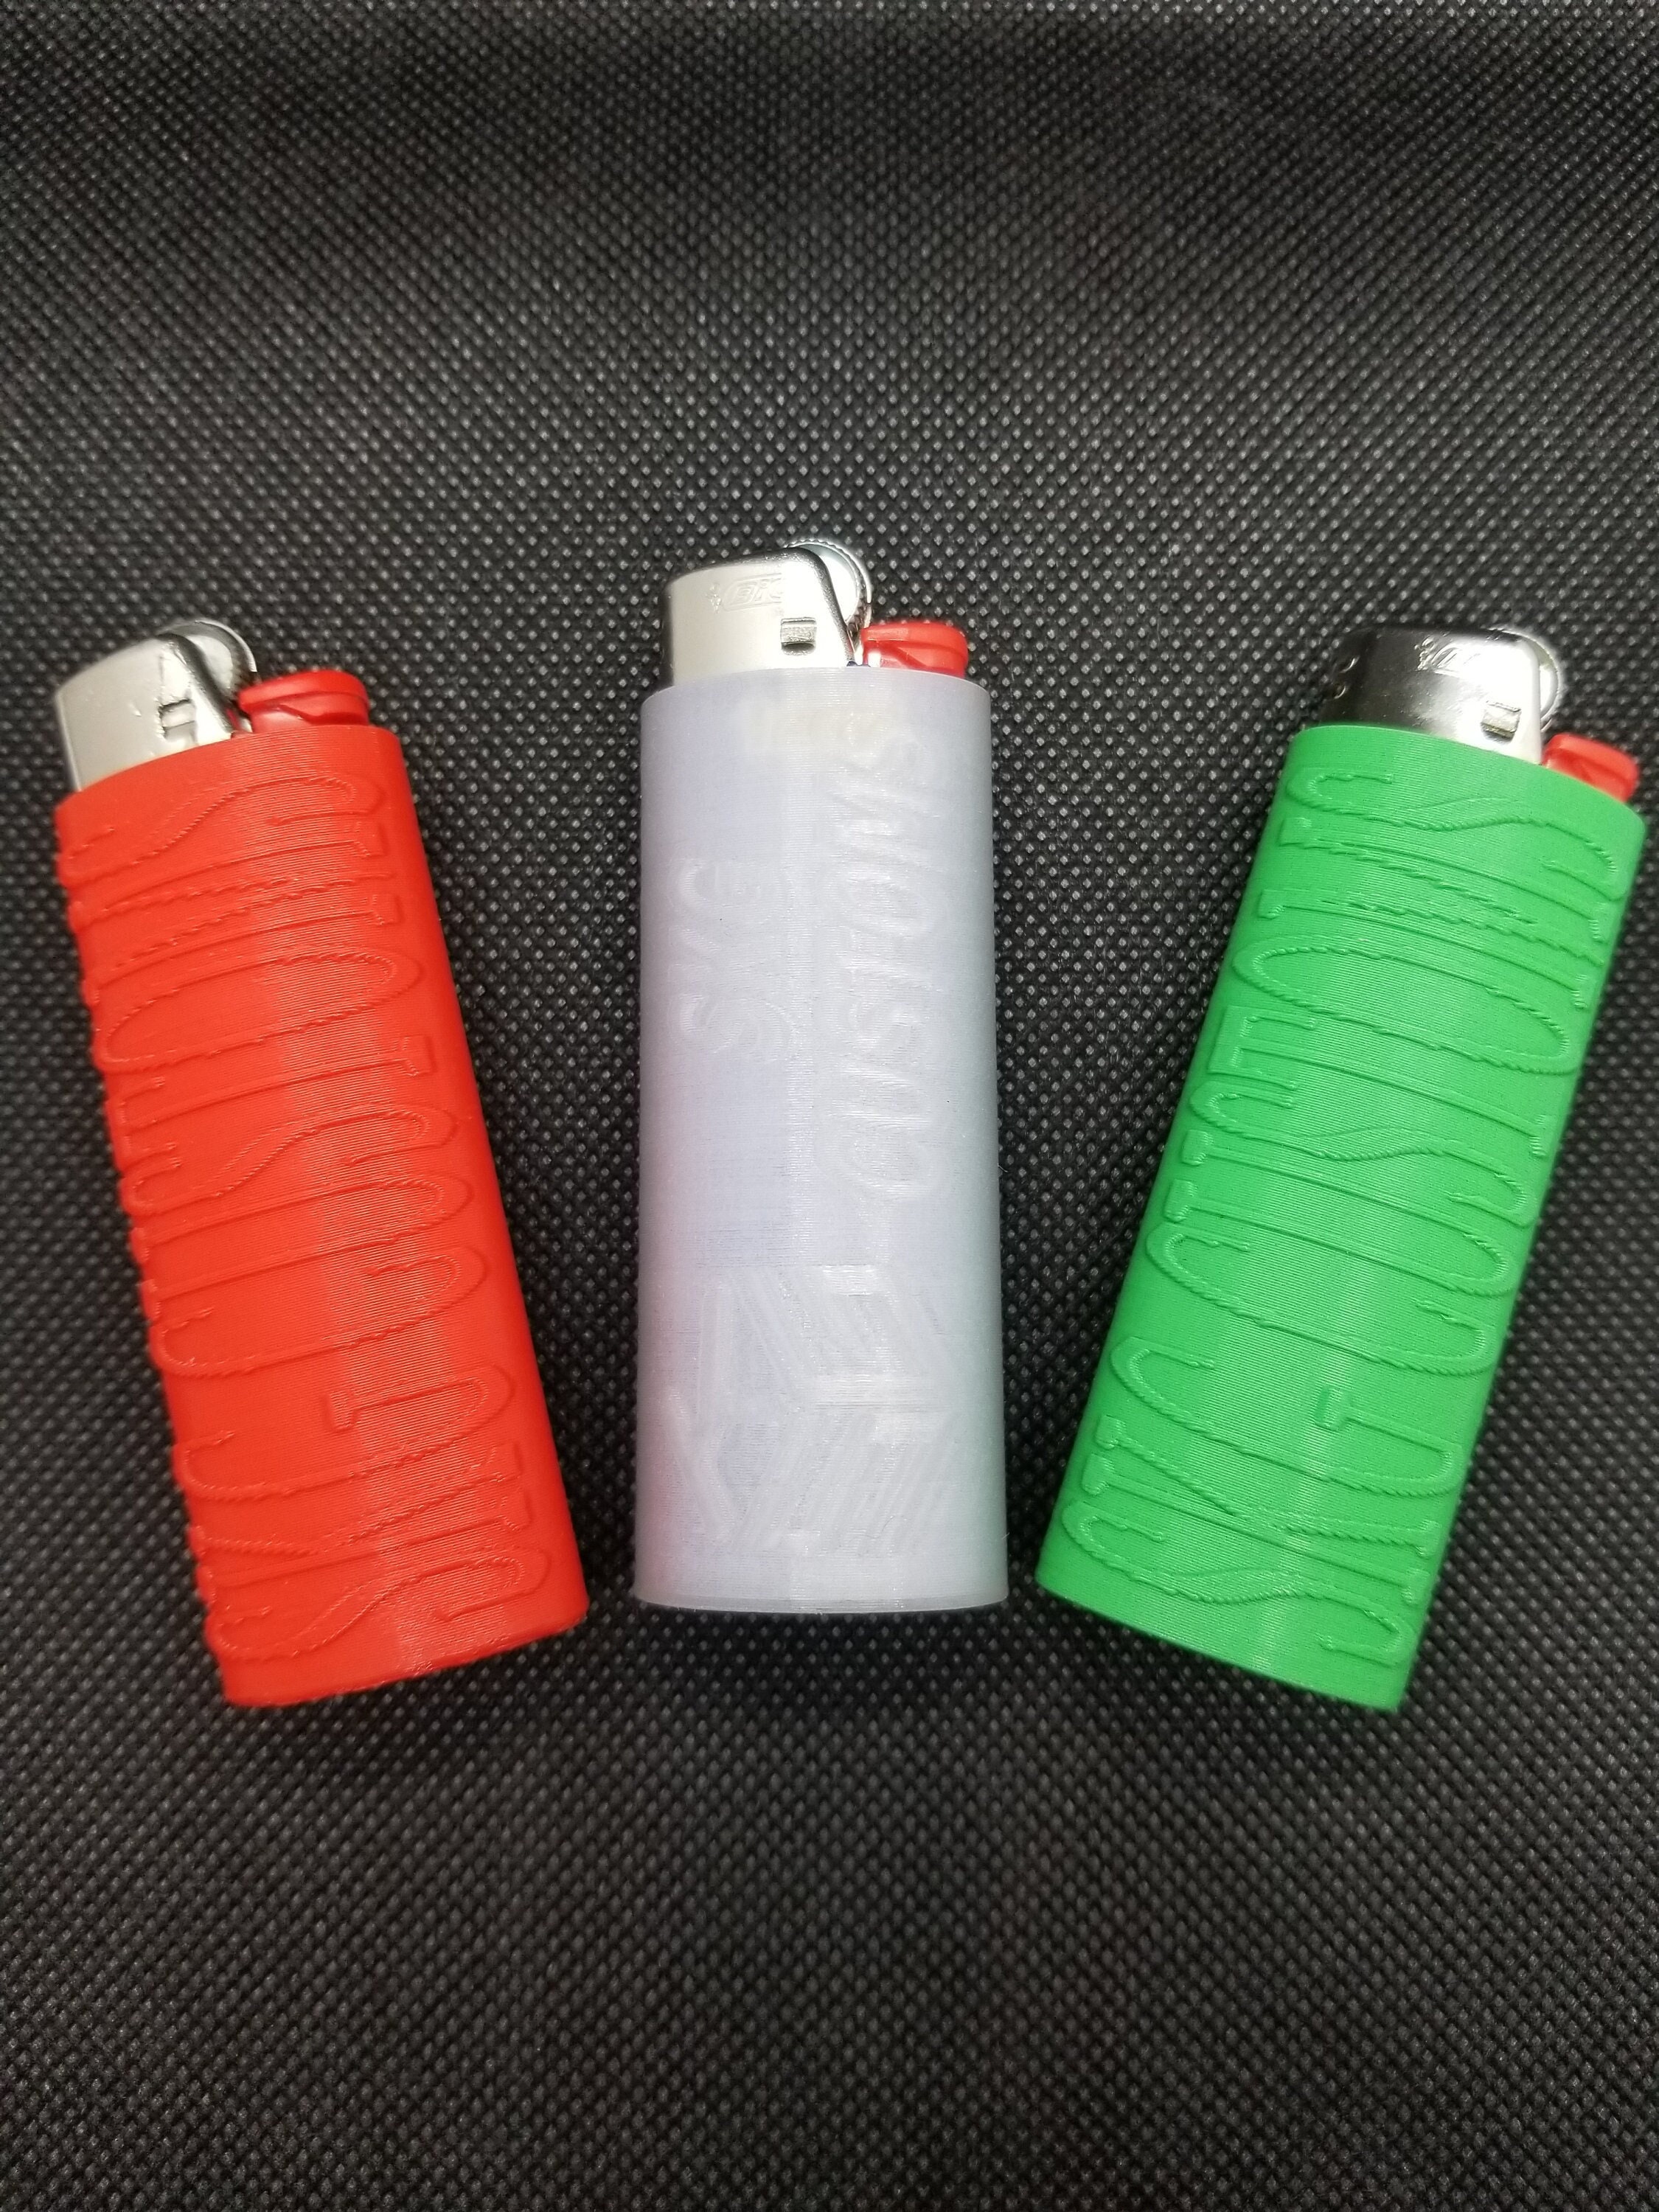 3D Printable Bic lighter case by Goodcat3d